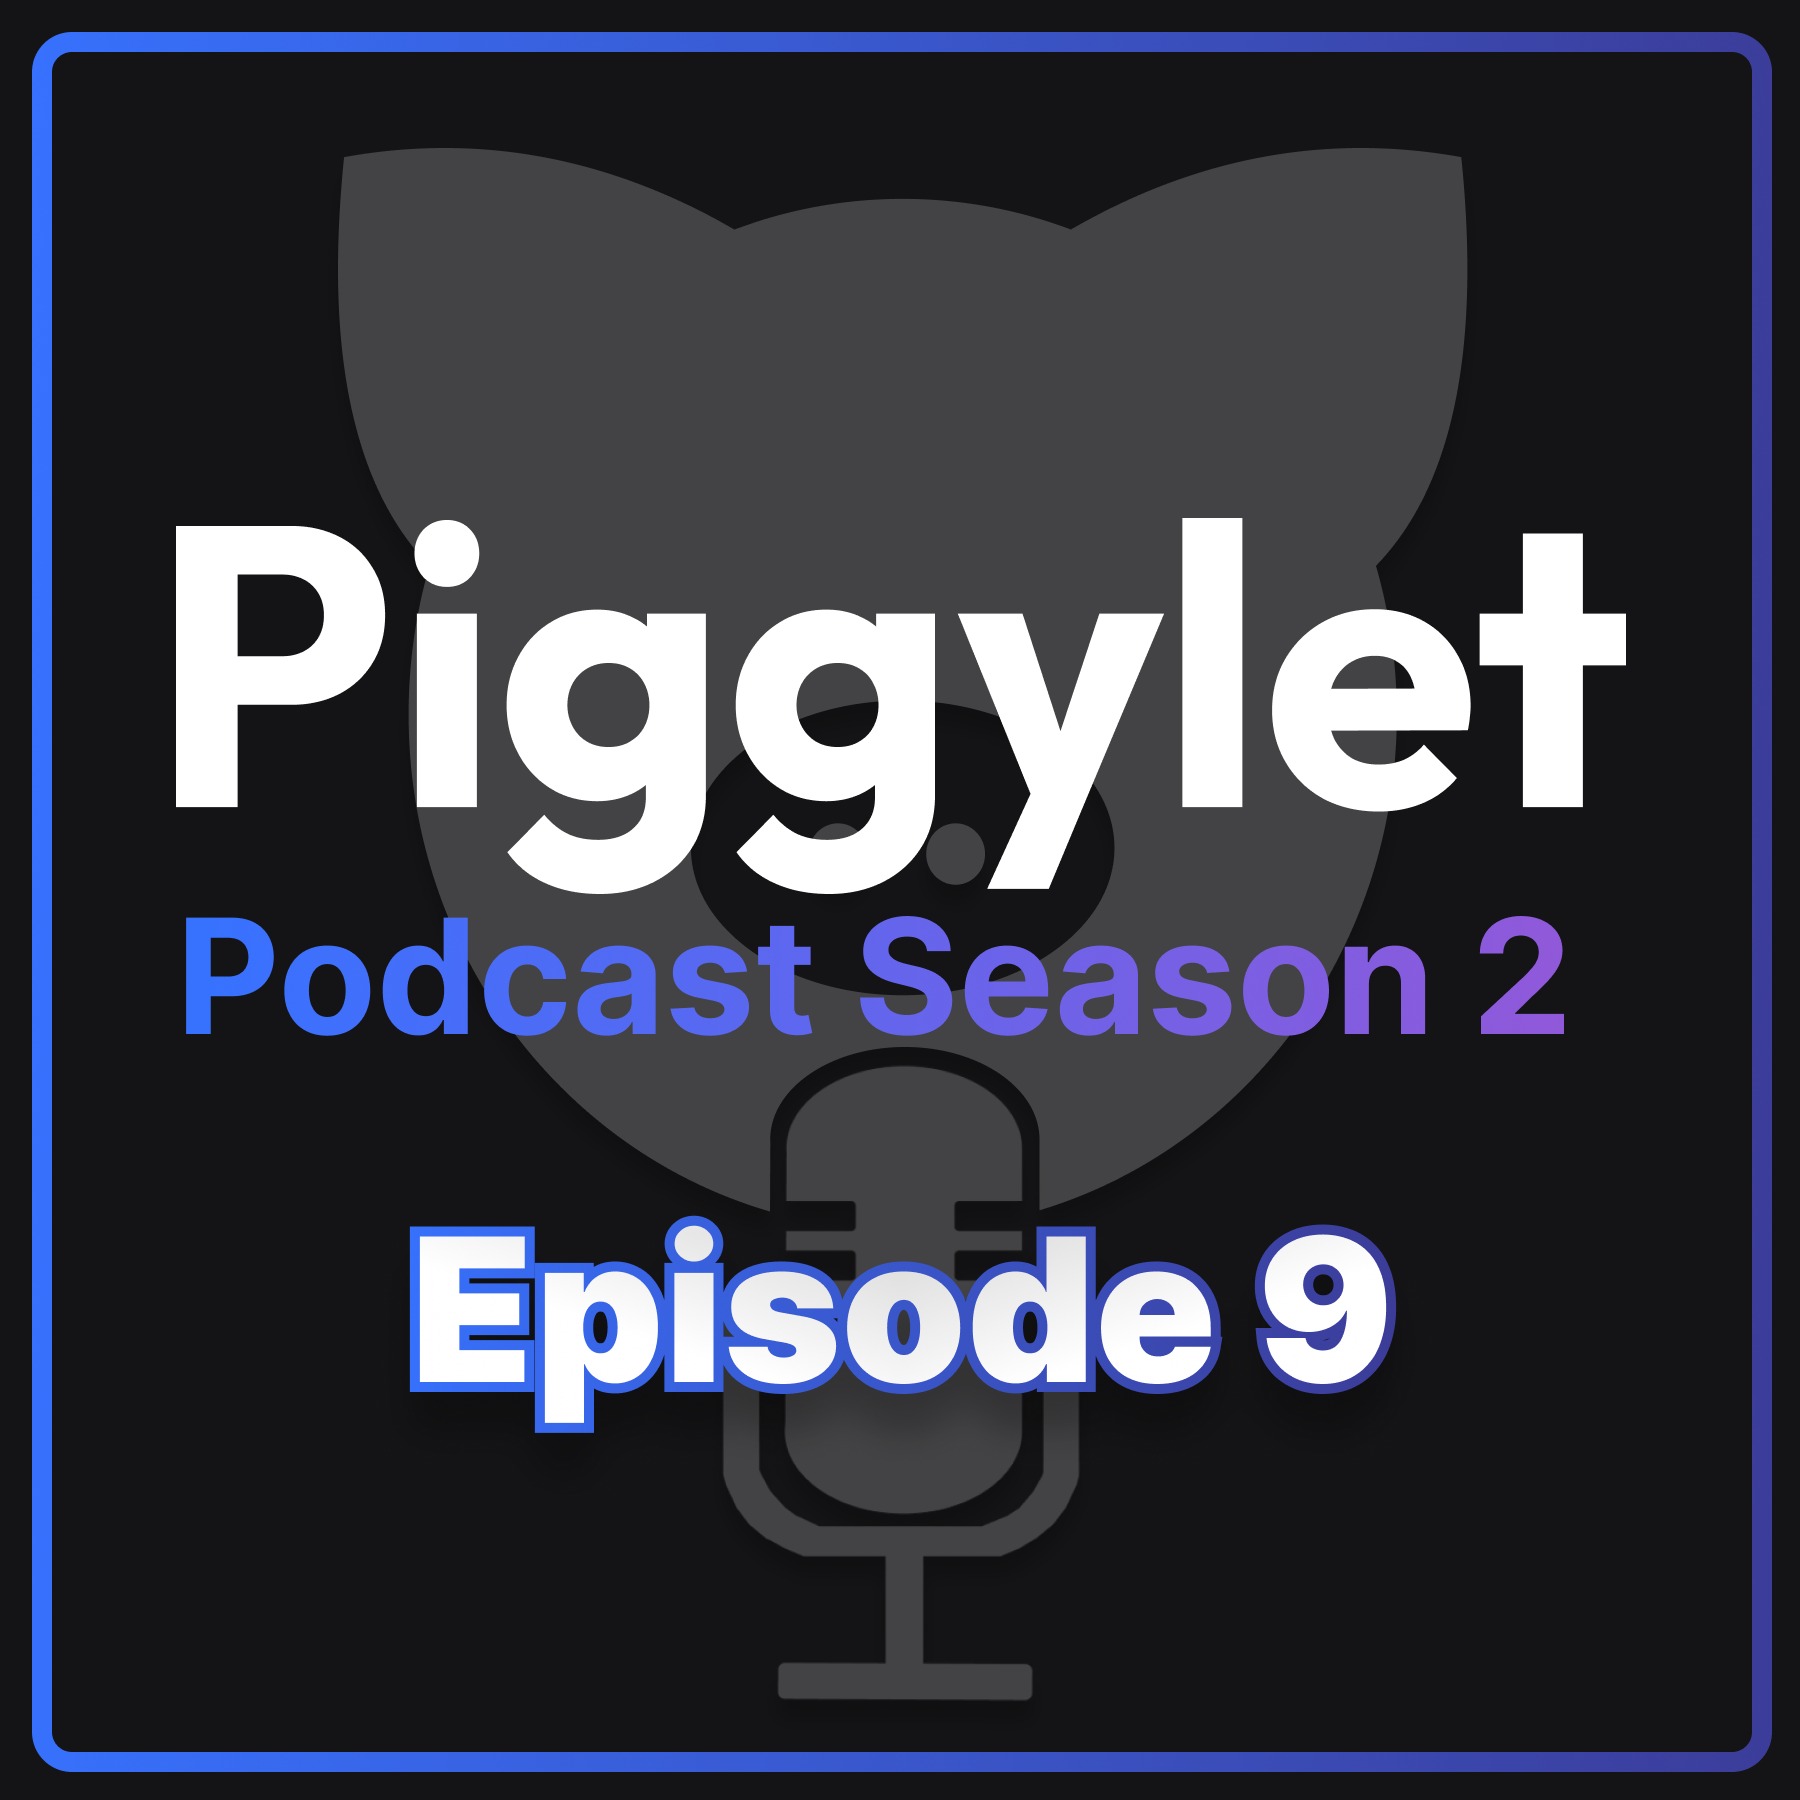 Piggylet Podcast Season 2: Episode 9